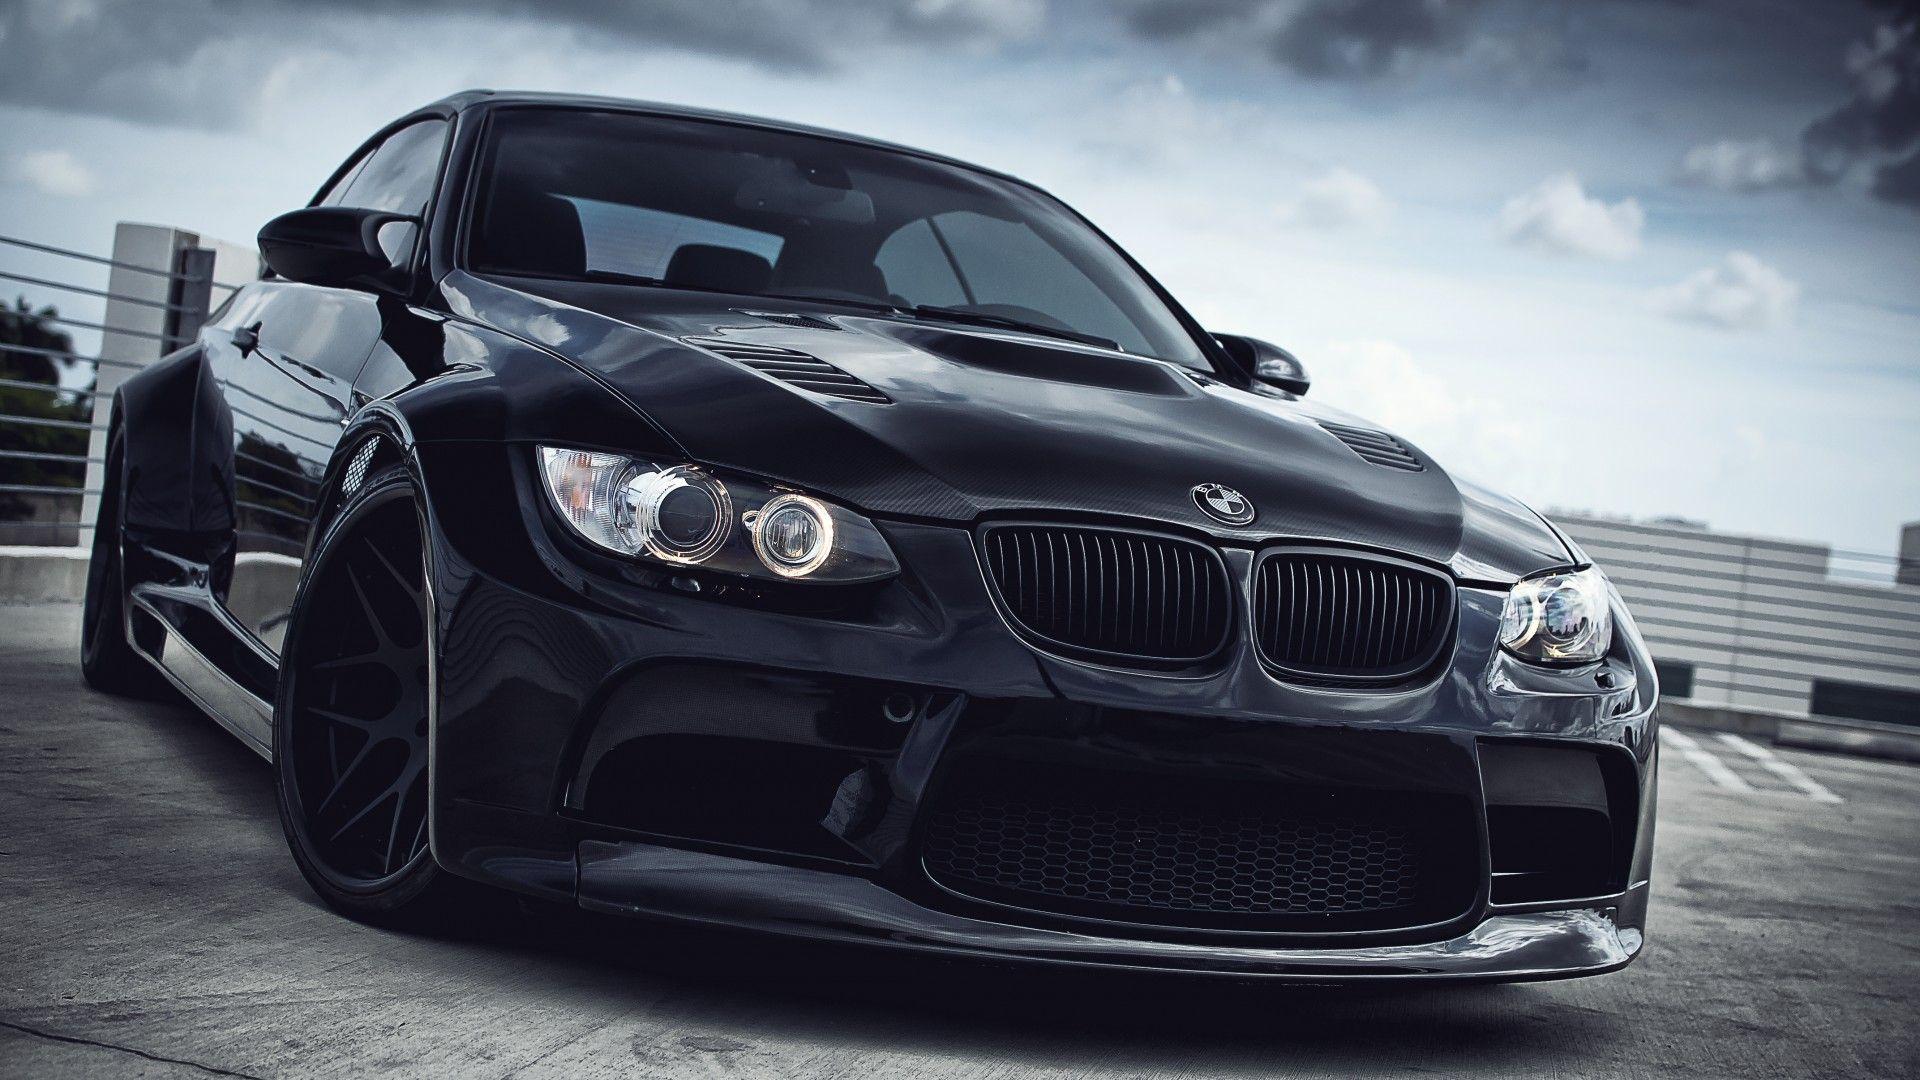 BMW M3 HD Desktop Wallpaper, Instagram photo, Background Image